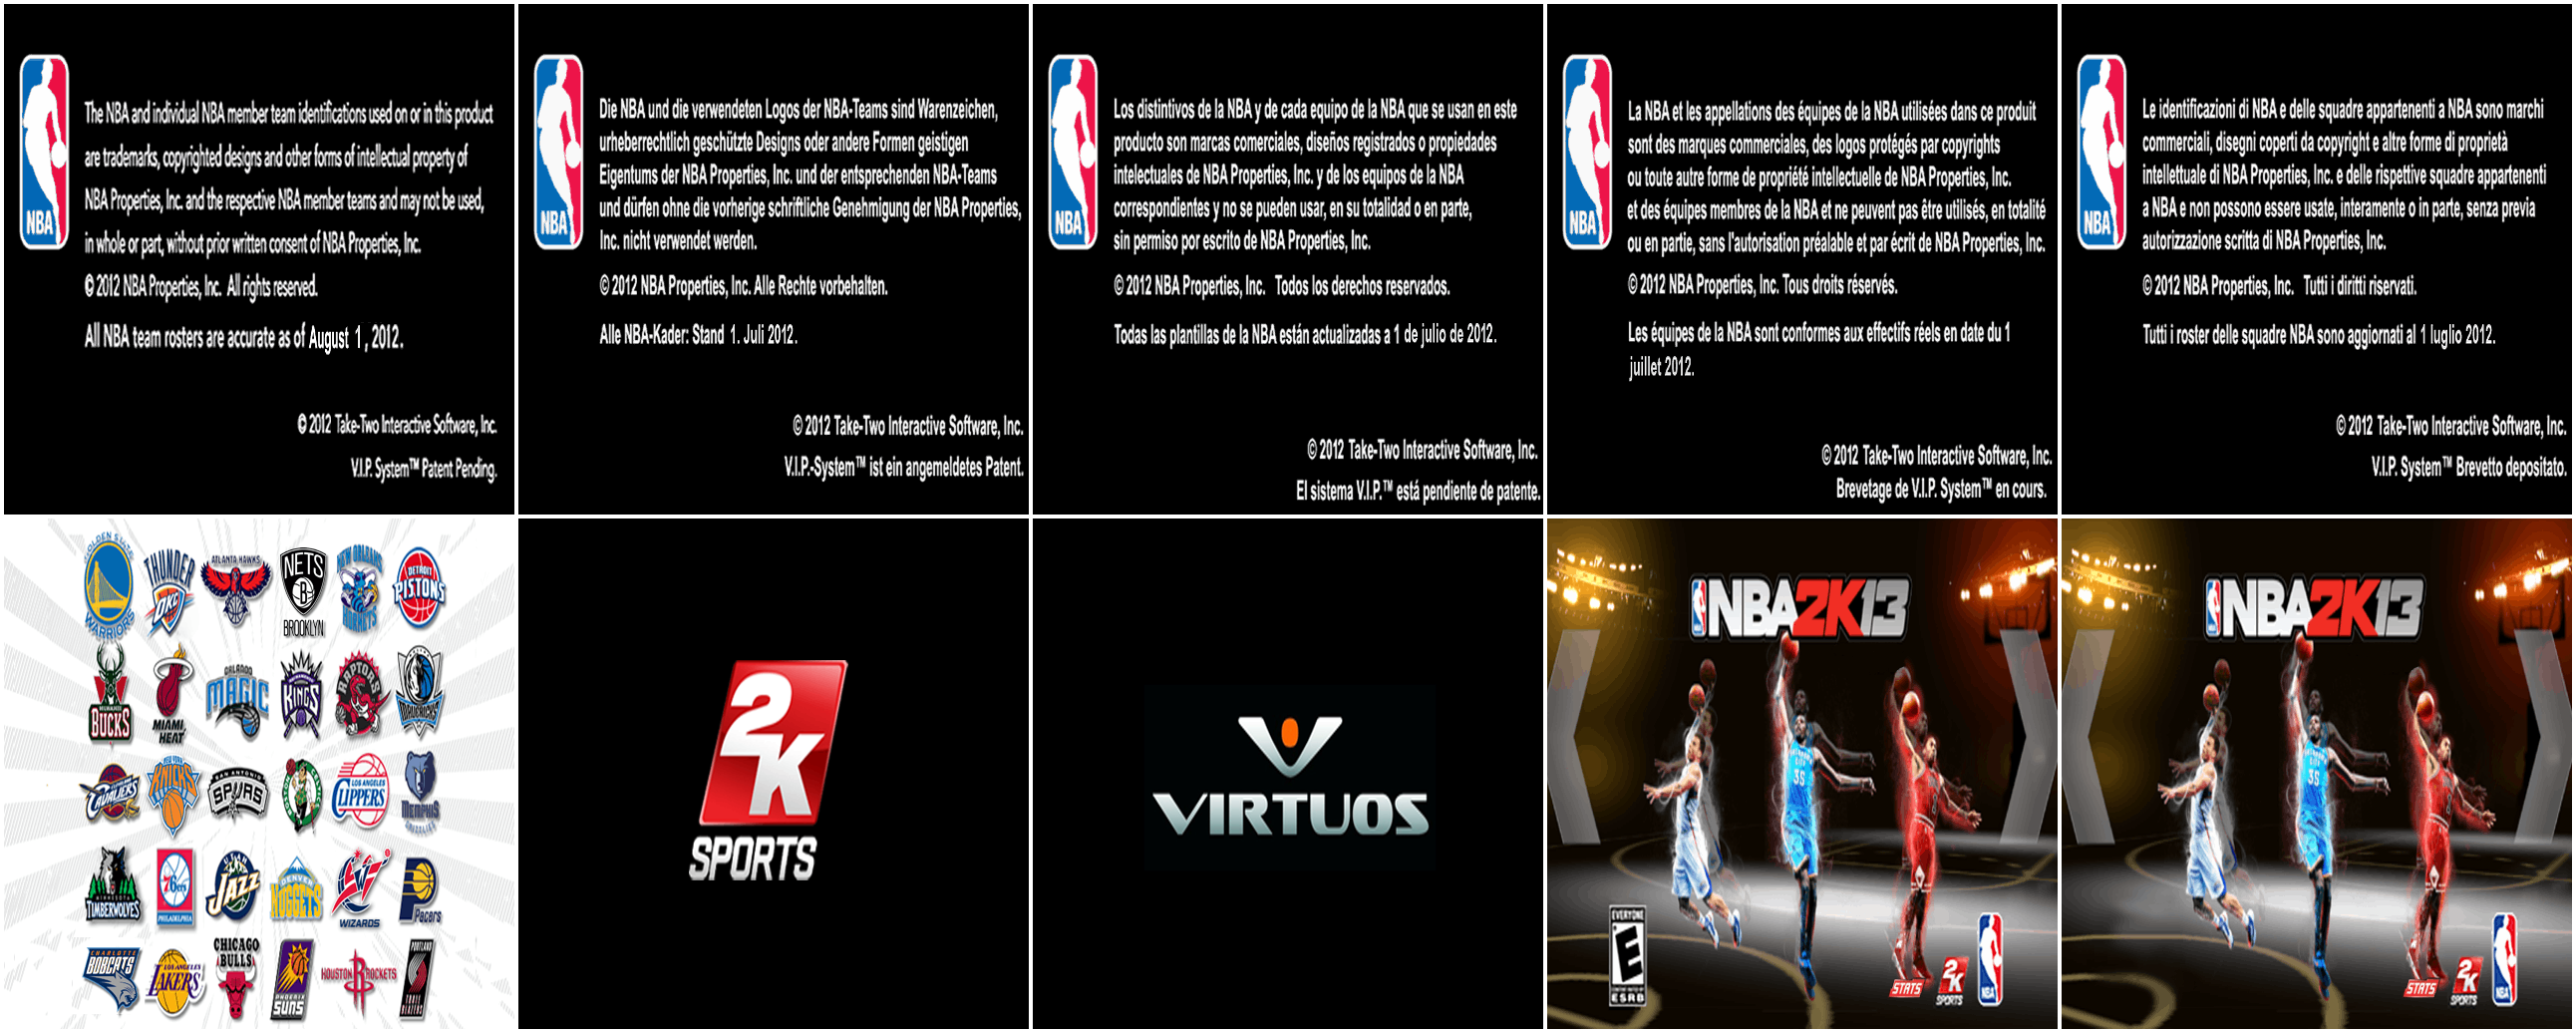 NBA 2K13 - Copyright & Title Screens